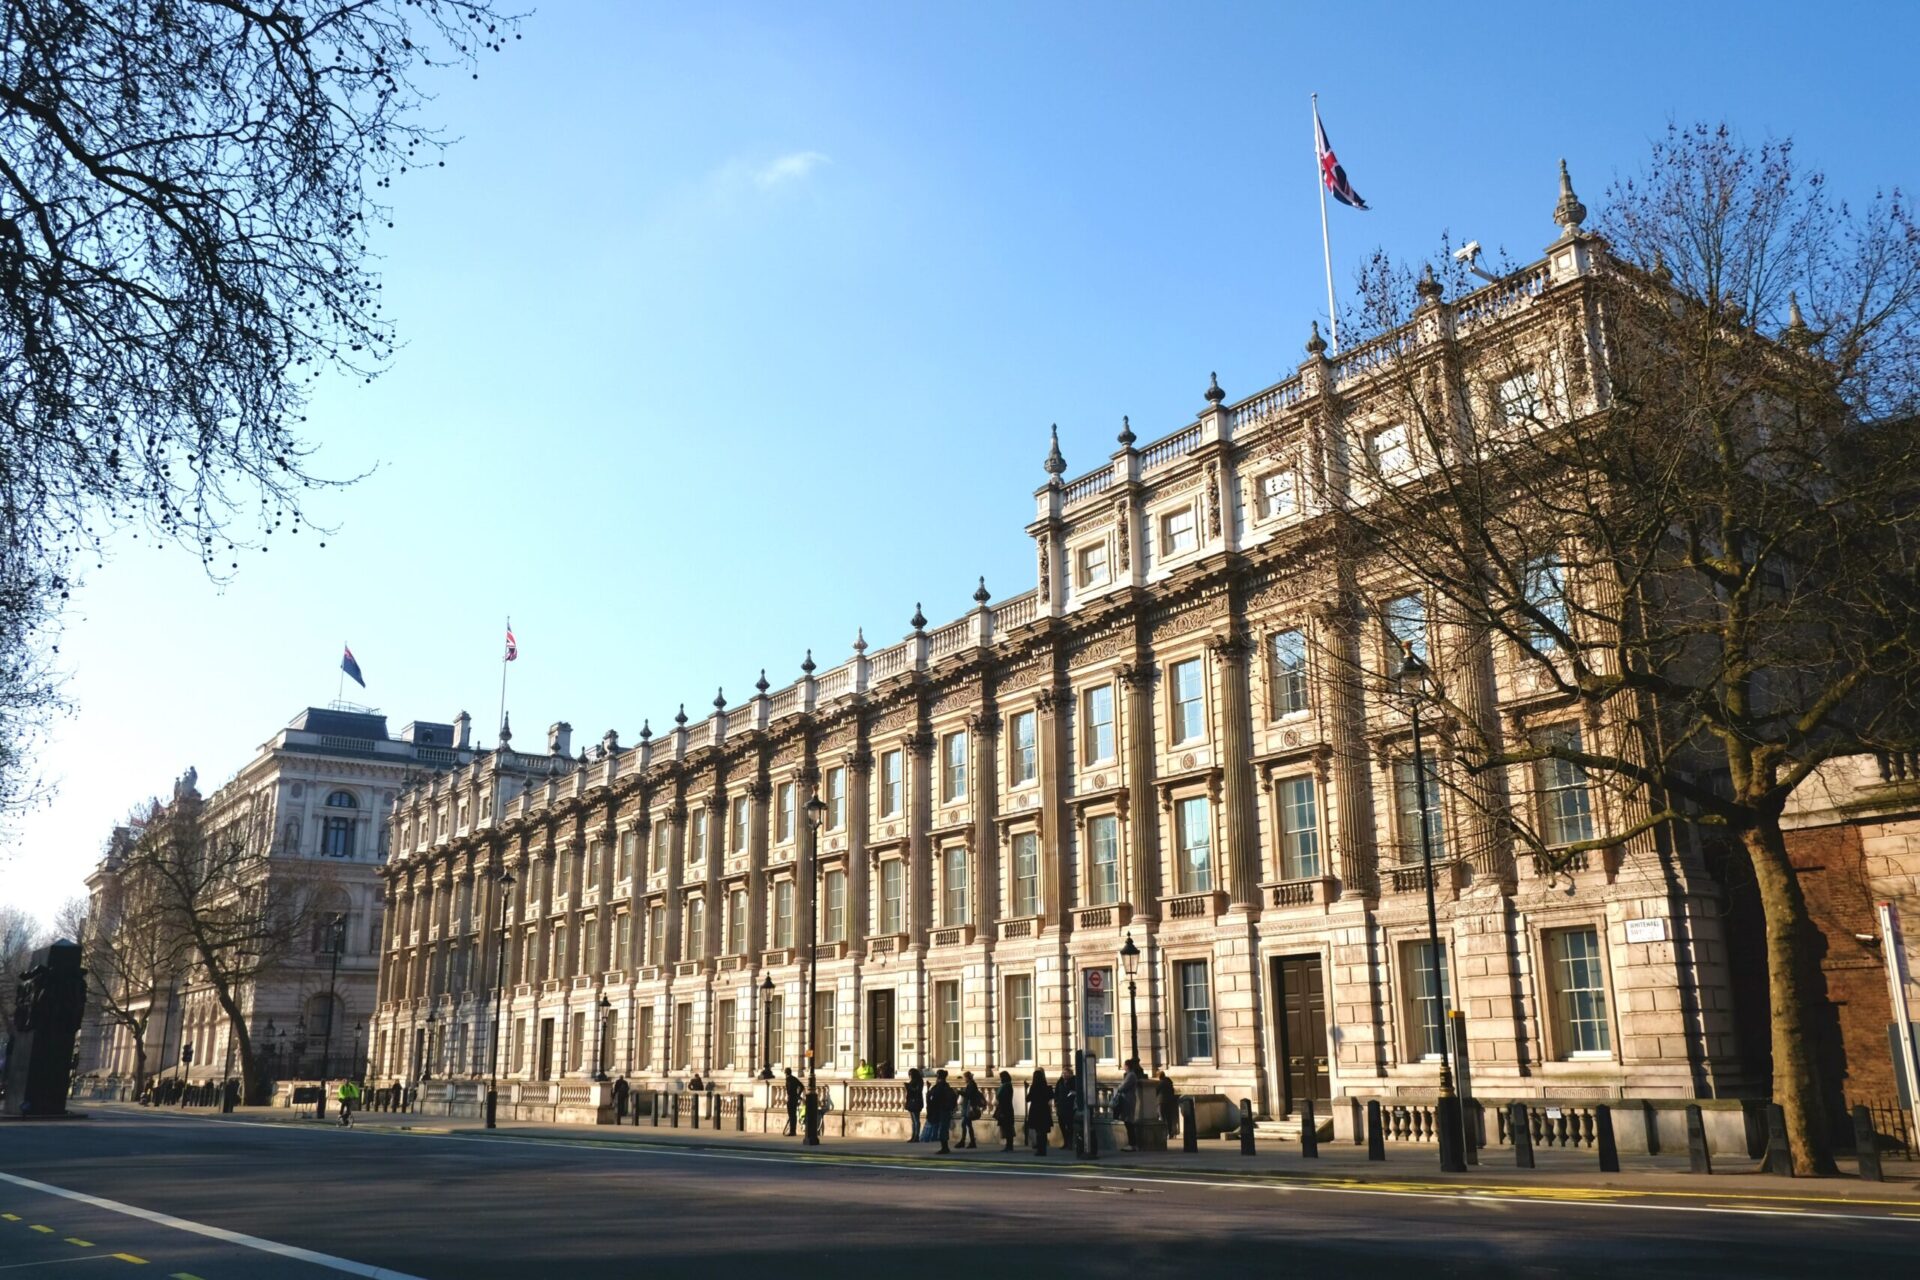 Cabinet Office, London